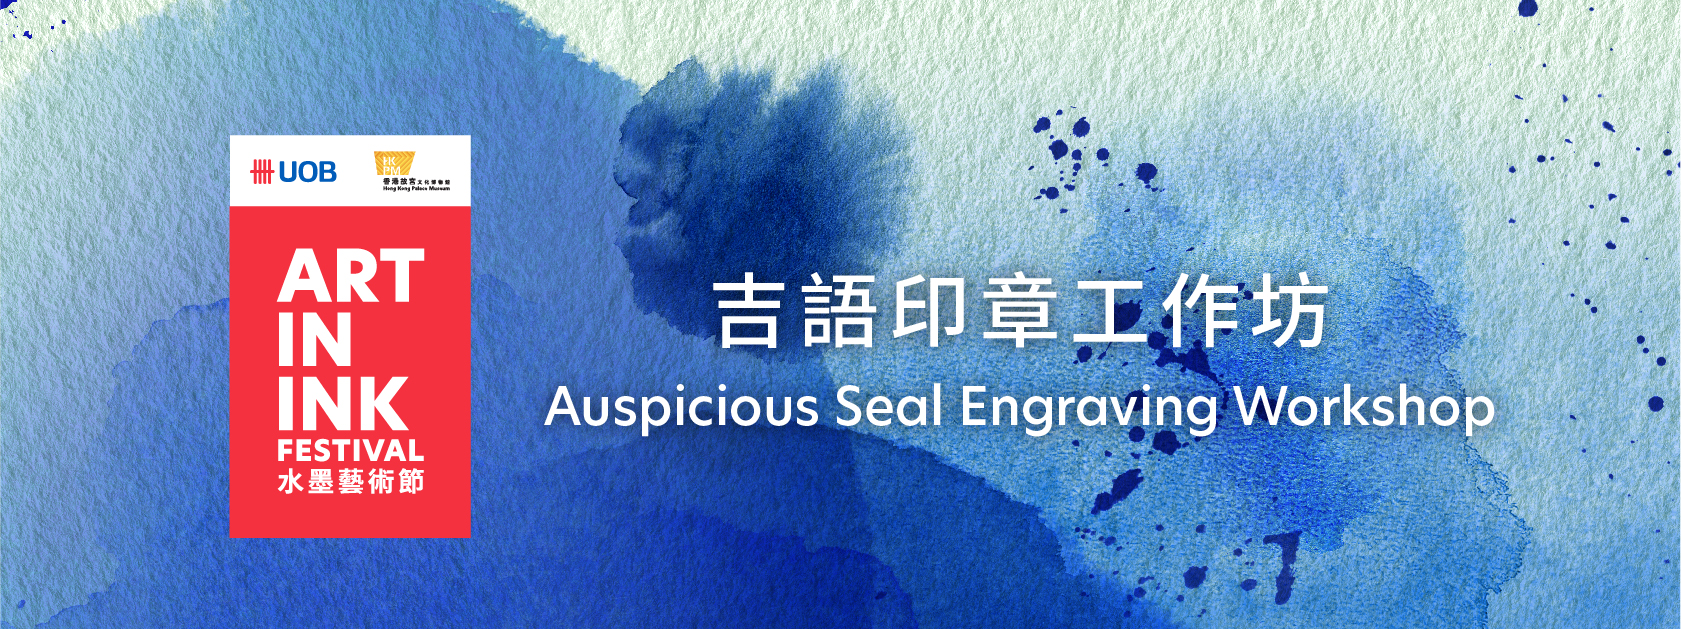 Auspicious Seal Engraving Workshop